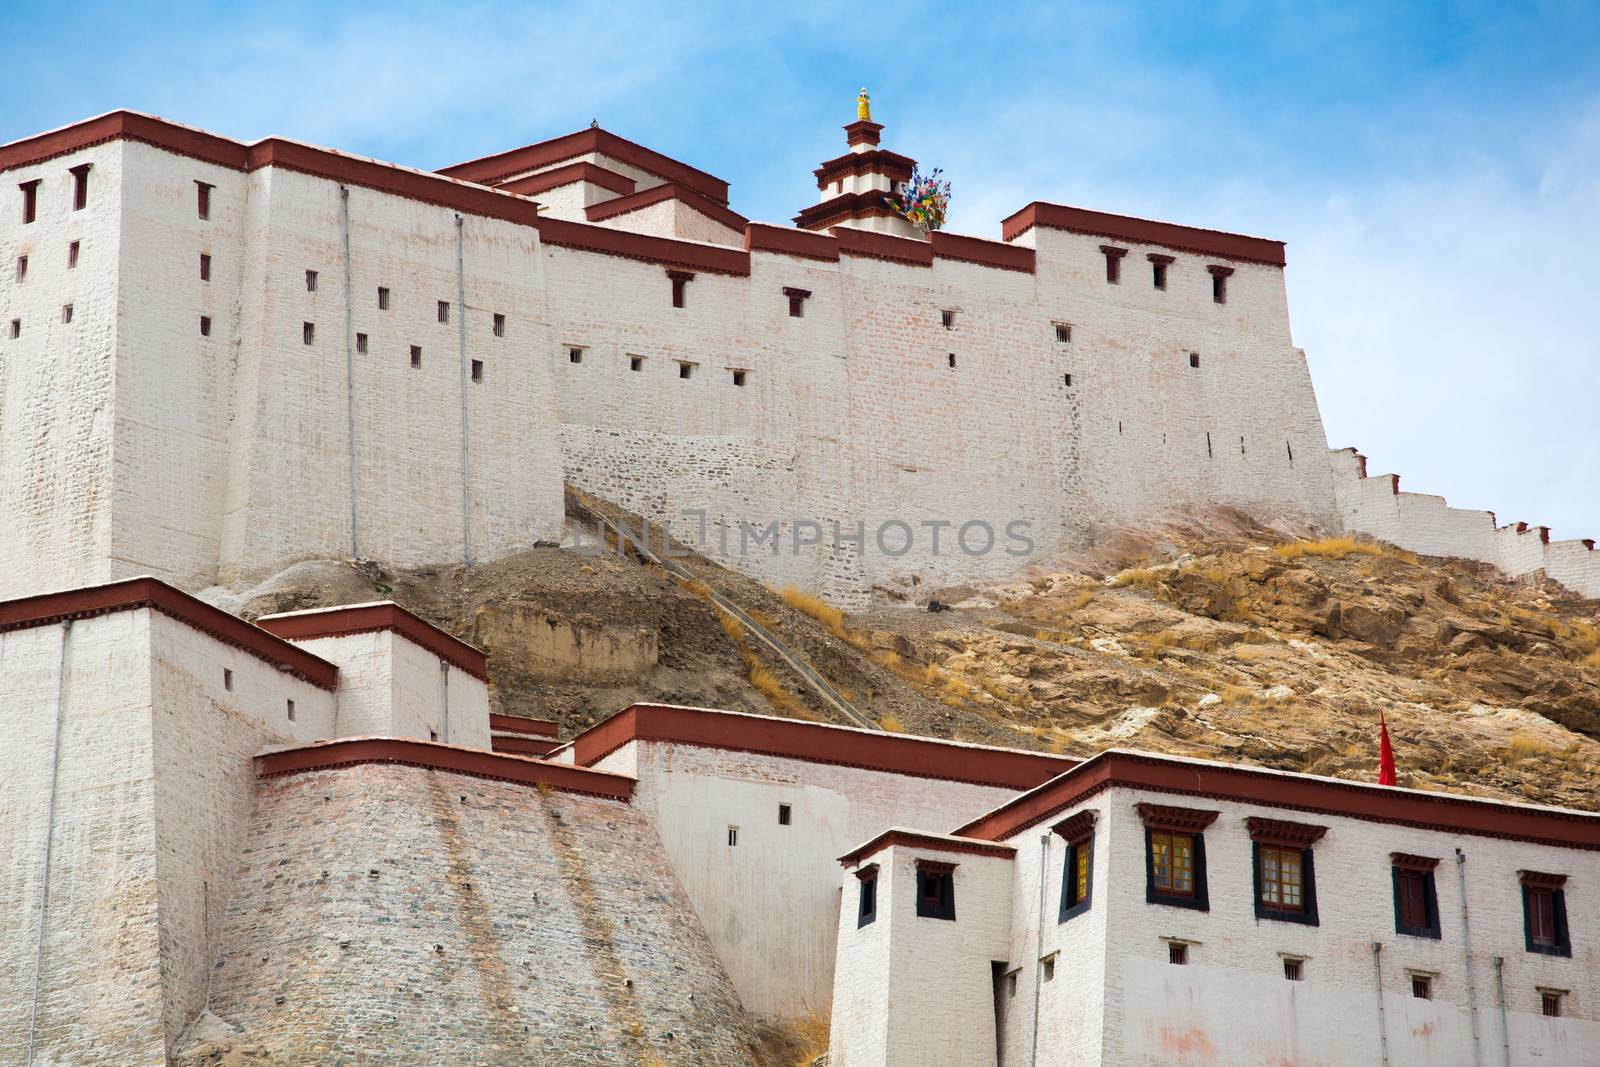 Historic home of the Dalai Lama, Lhasa, Tibet. An UNESCO World Heritage site.